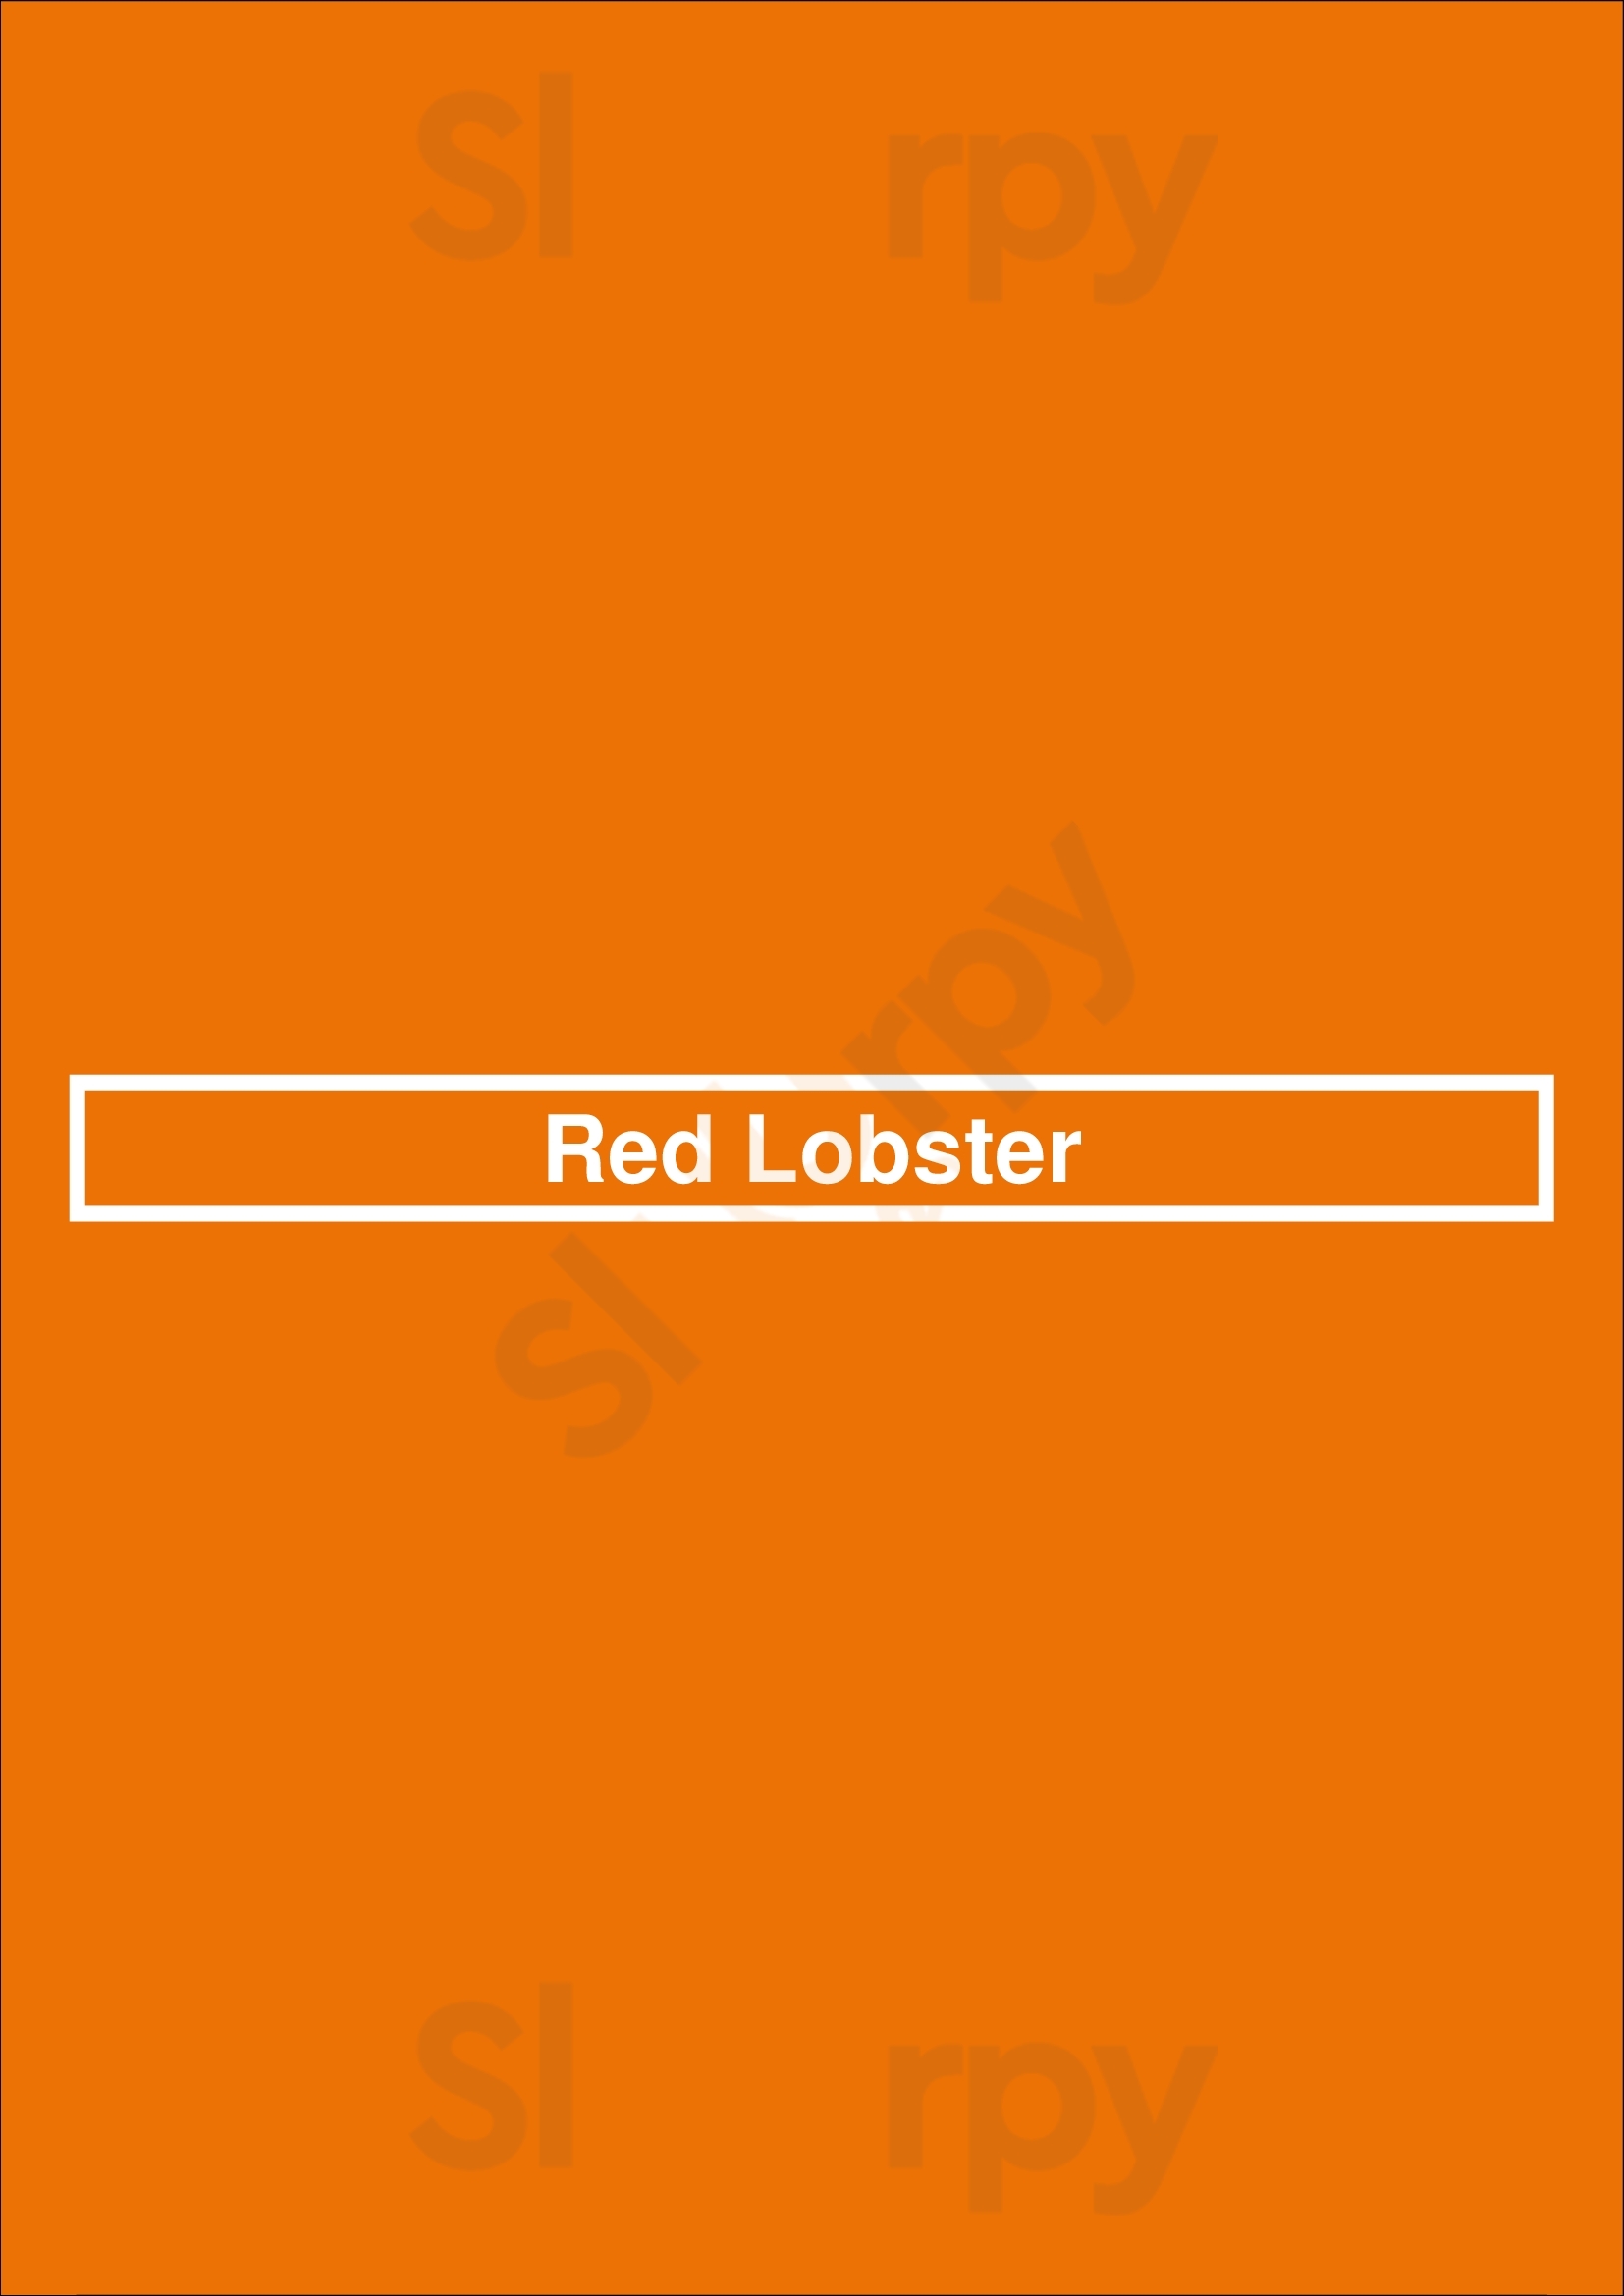 Red Lobster Orlando Menu - 1